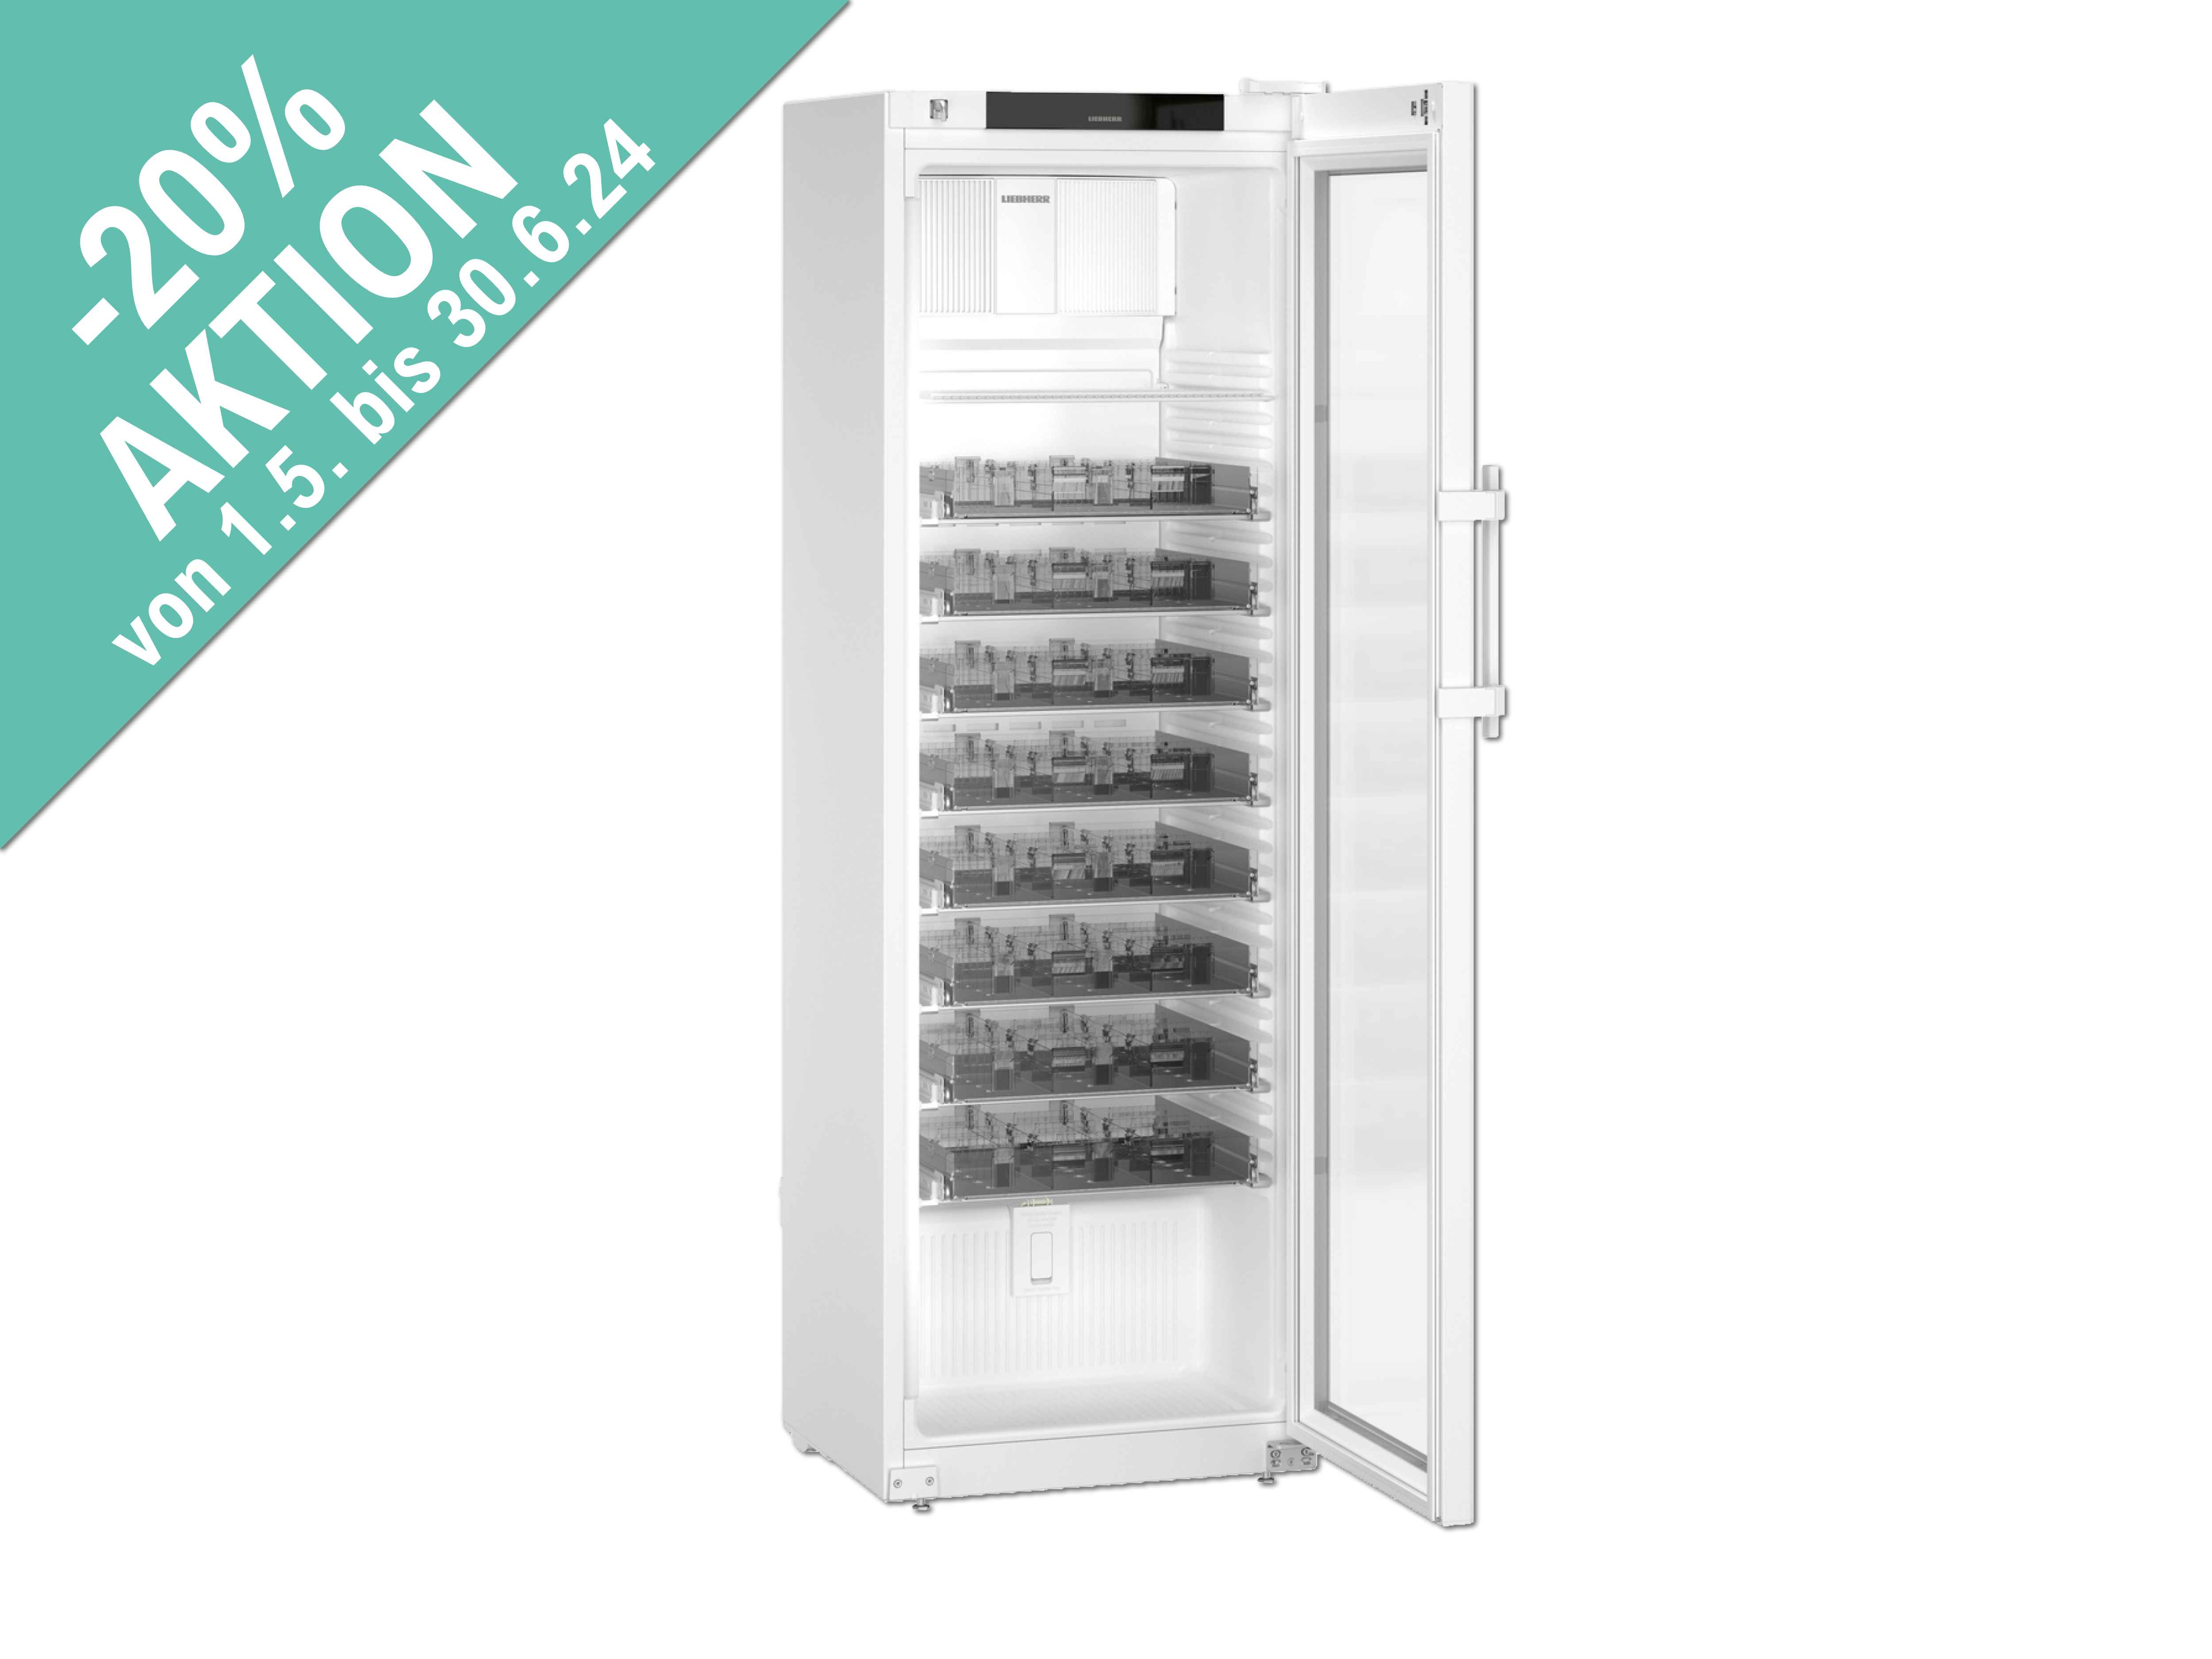    Medikamentenkühlschrank HMFvh 4011, Umluftkühlung, LED, Glastür + 8 Laden